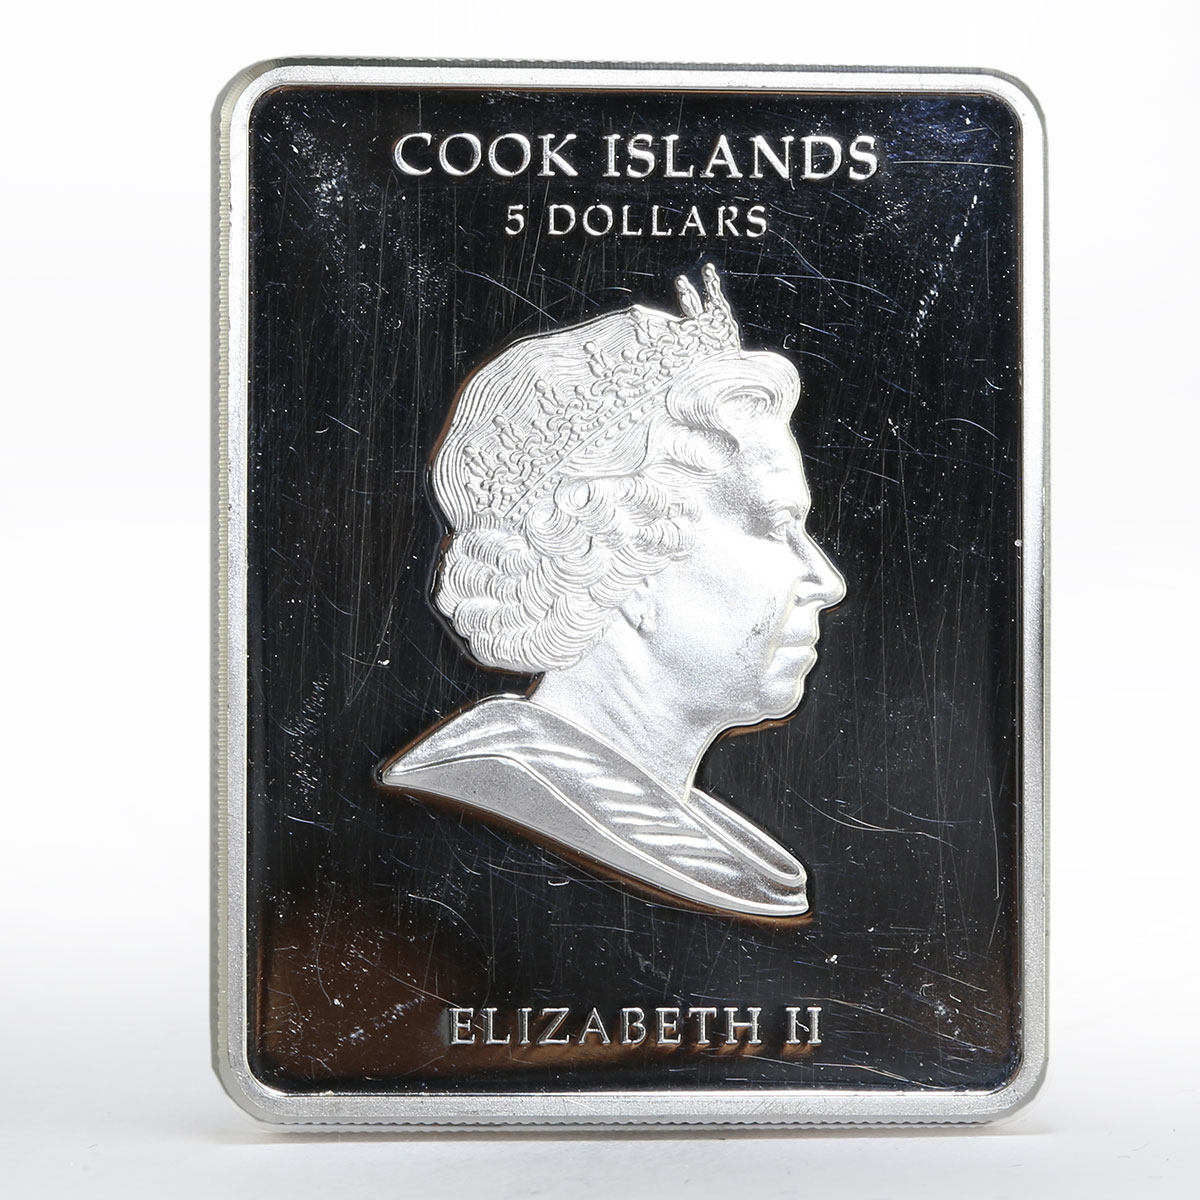 Cook Islands 5 dollars Masters of Art series Johannes Vermeer silver coin 2009